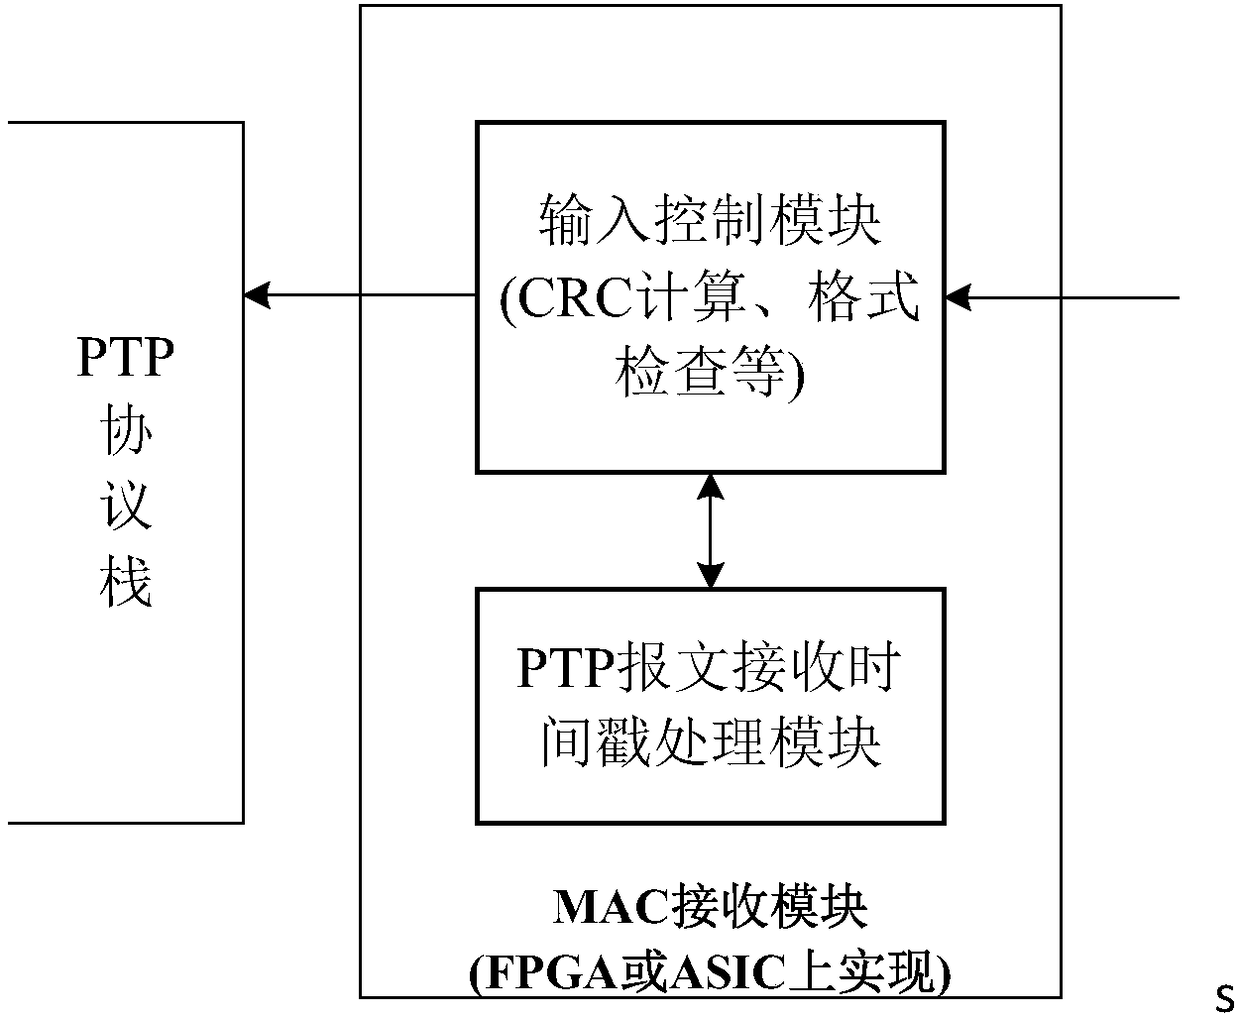 Ethernet MAC module realization device and Ethernet MAC module realization method used for IEEE 1588v2 protocol